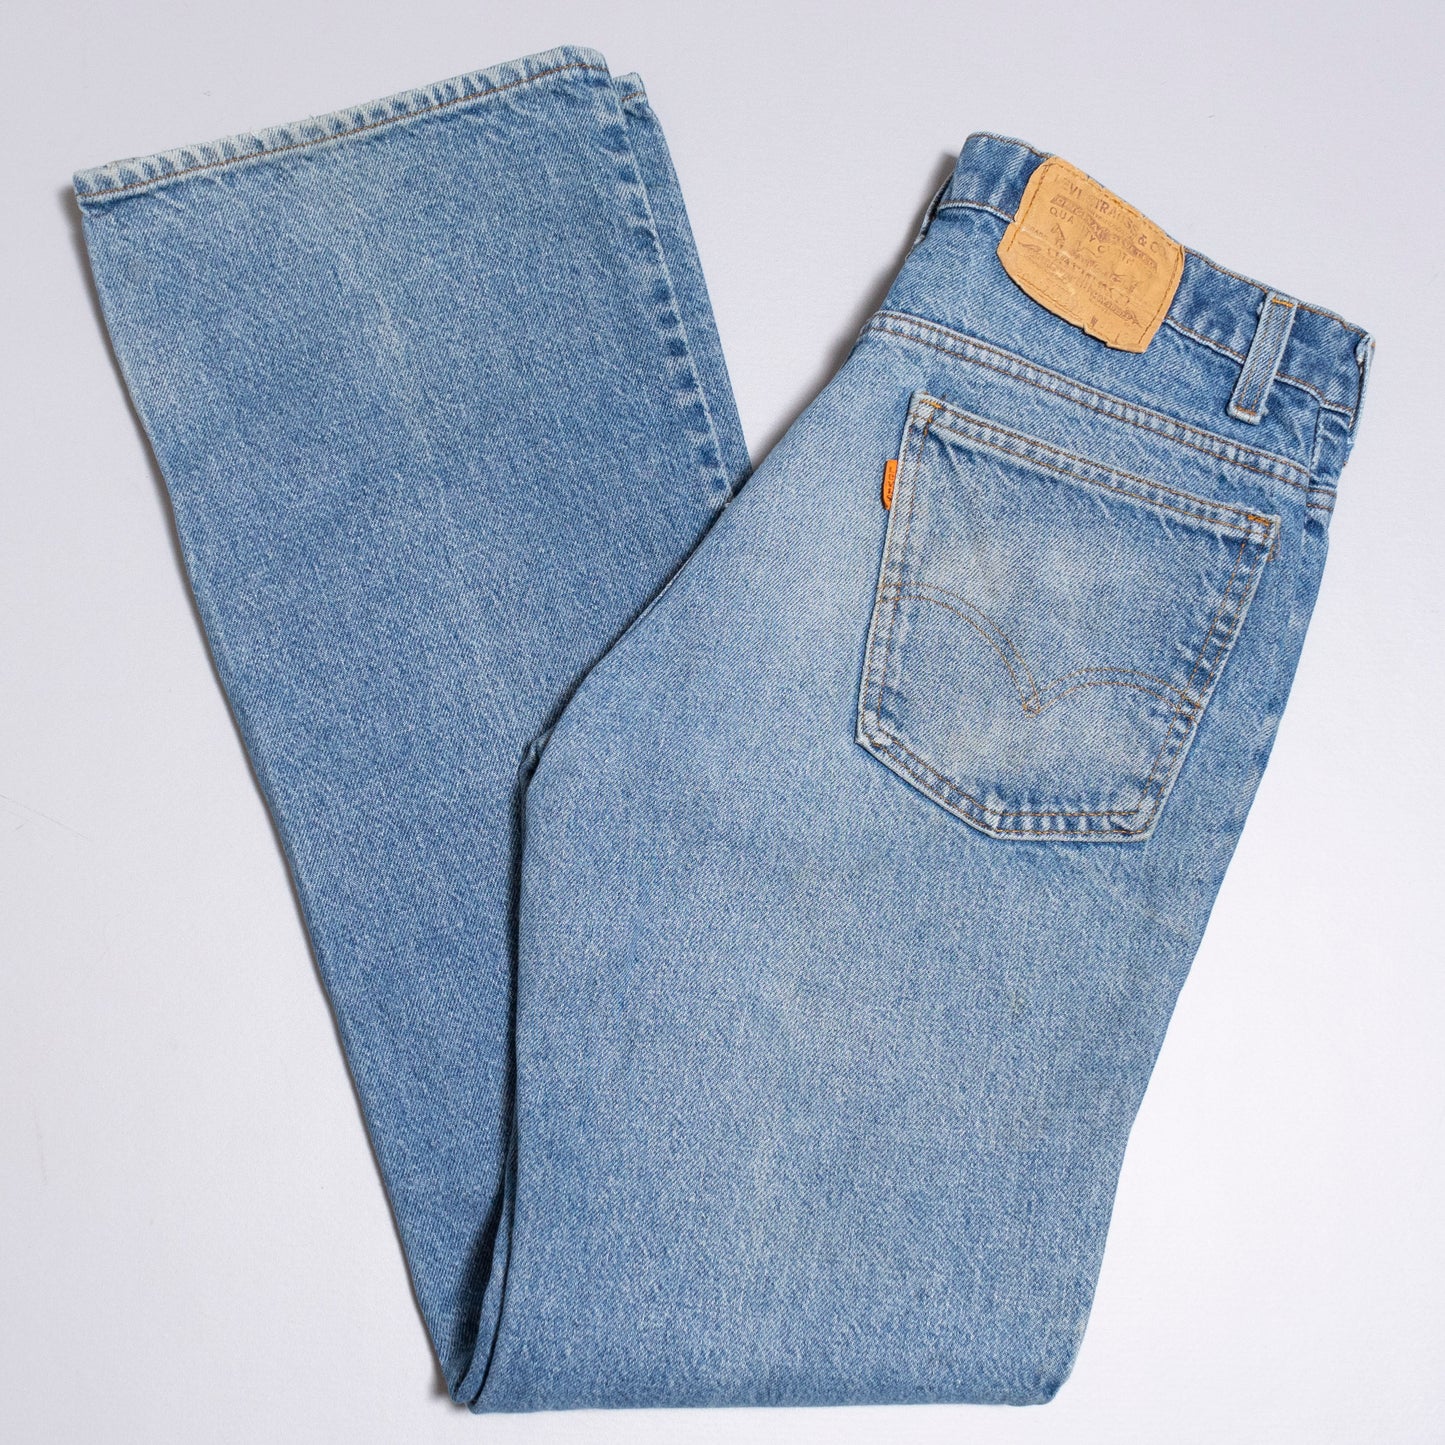 Levis Orange Tab Jeans, 32/34